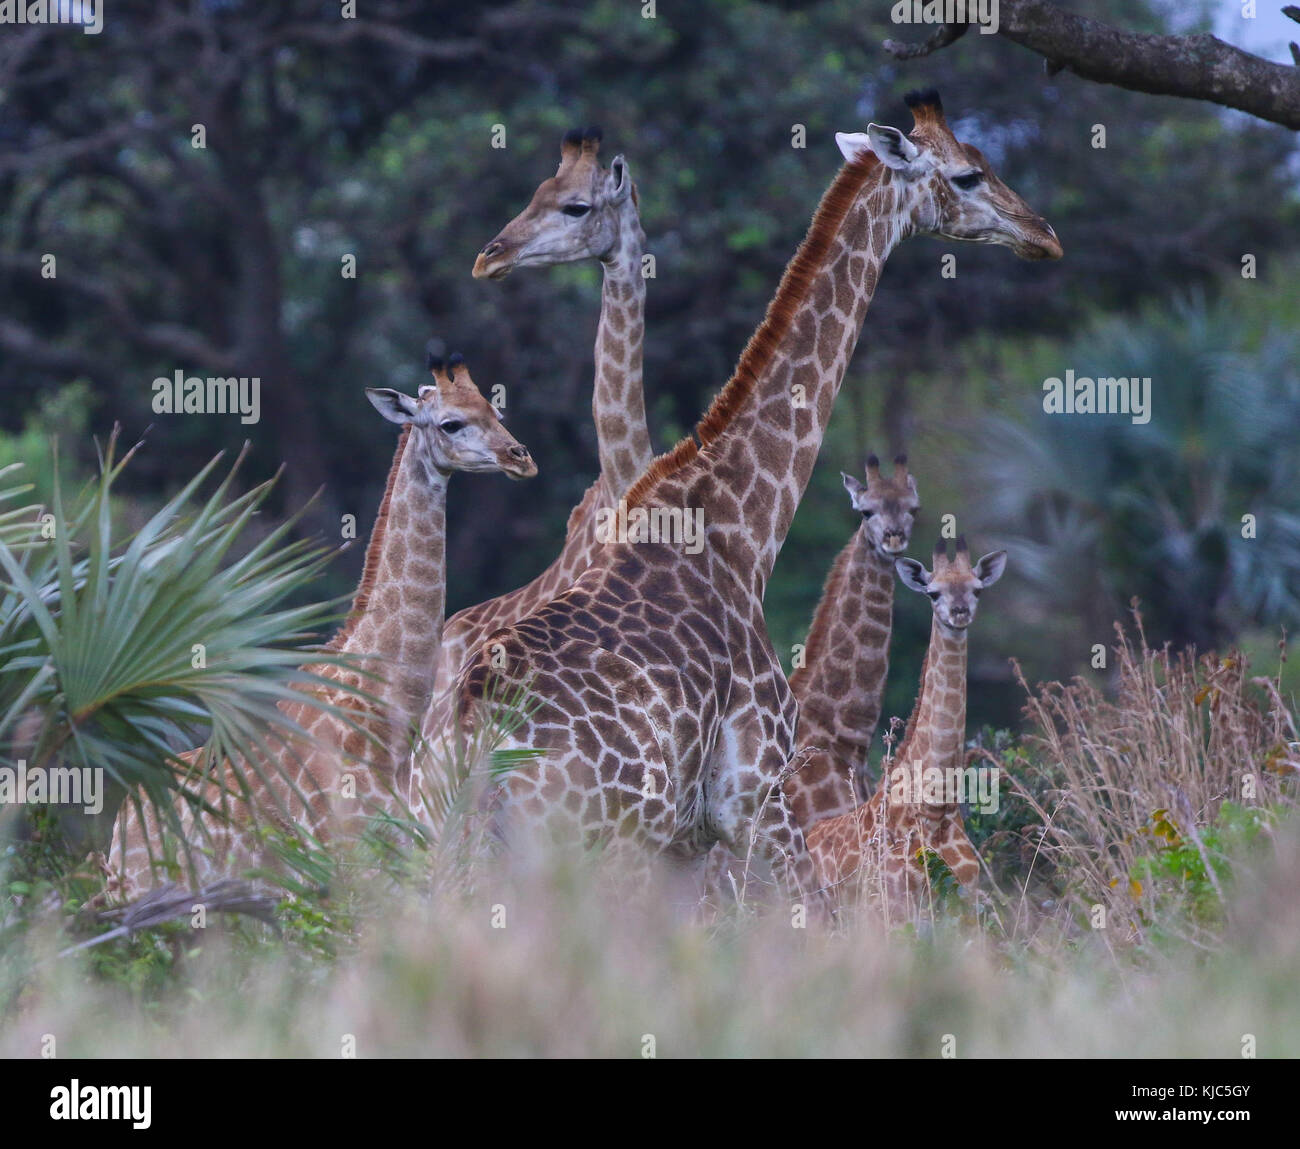 Giraffes at Eshowe, South Africa Stock Photo